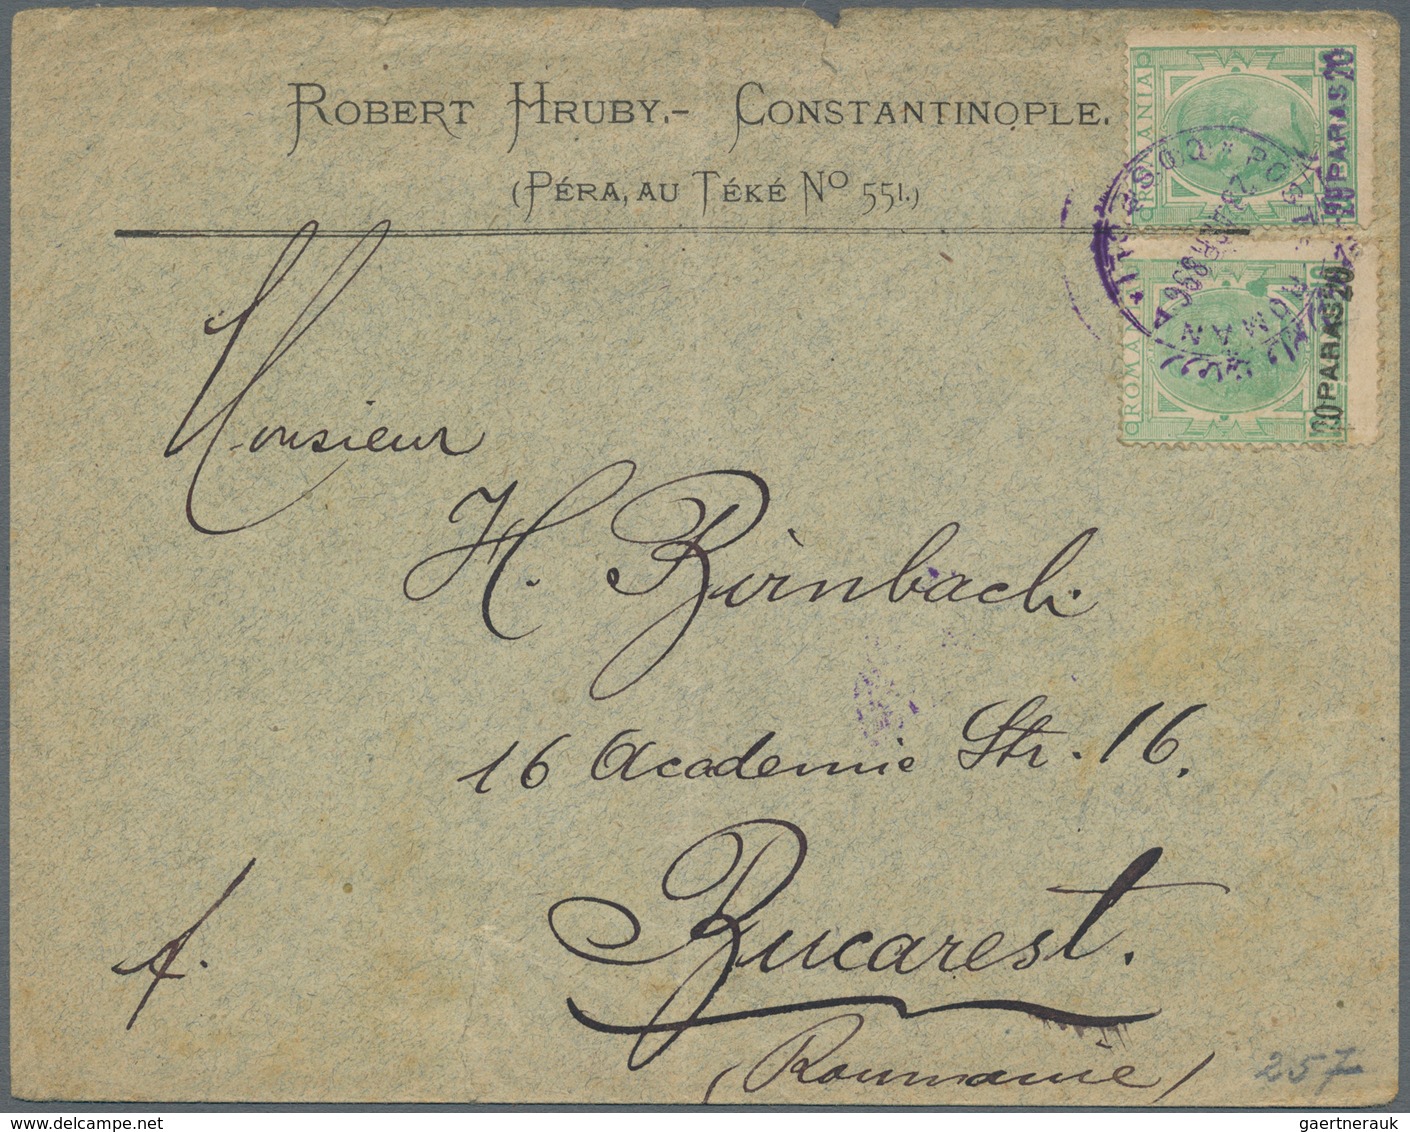 Rumänien - Rumänische Post In Der Levante: 1896 Printed Envelope Sent From The Rumanian P.O. In Cons - Levant (Türkei)